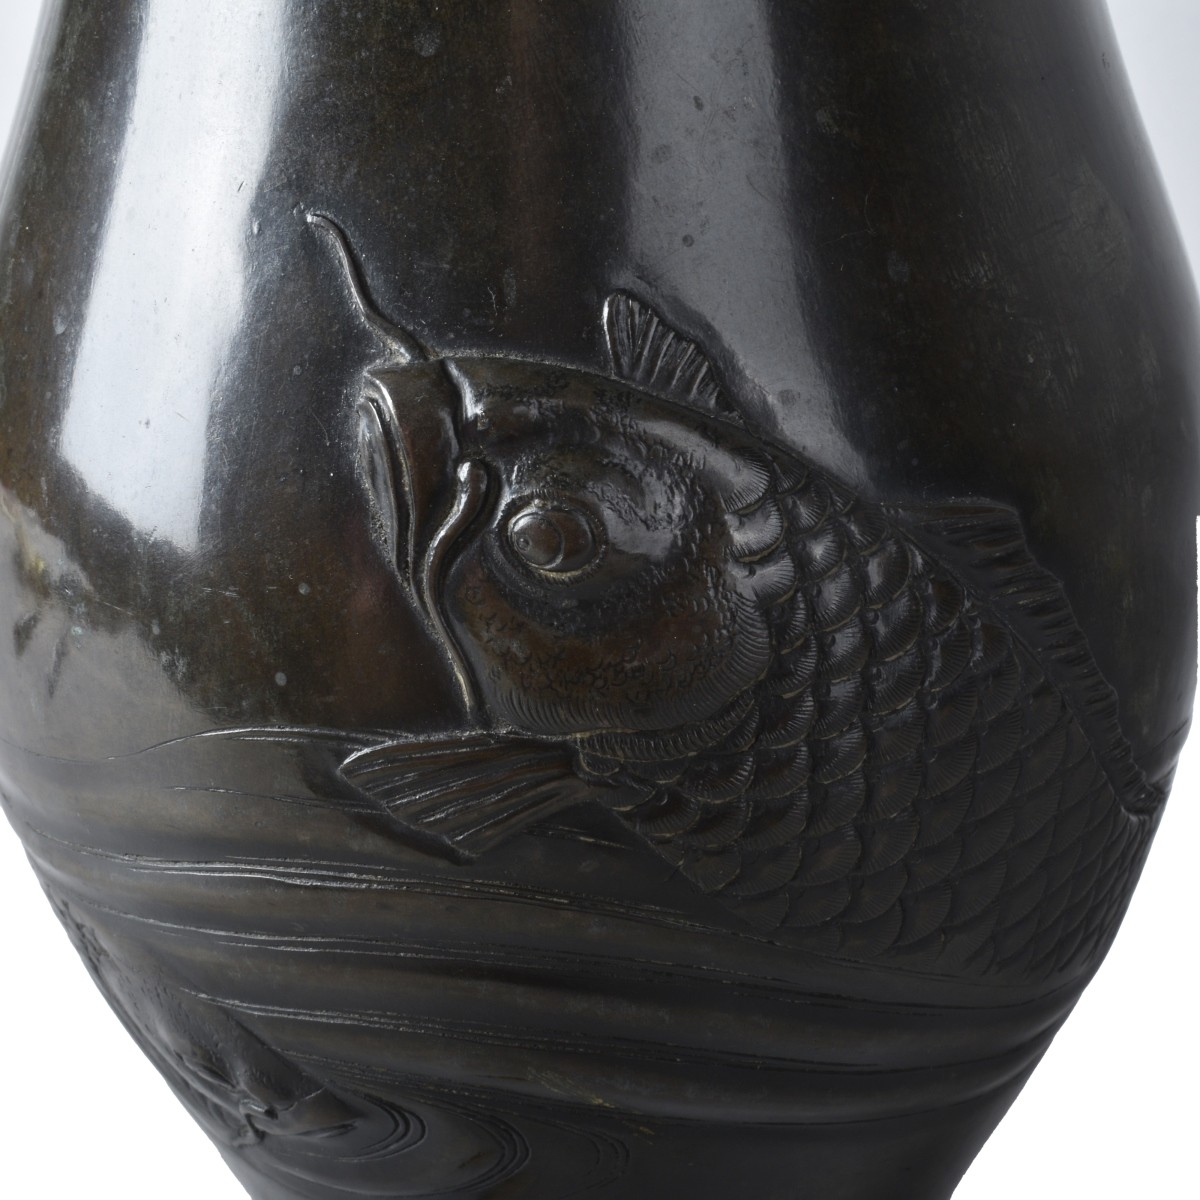 19/20th C. Japanese Bronze Vase